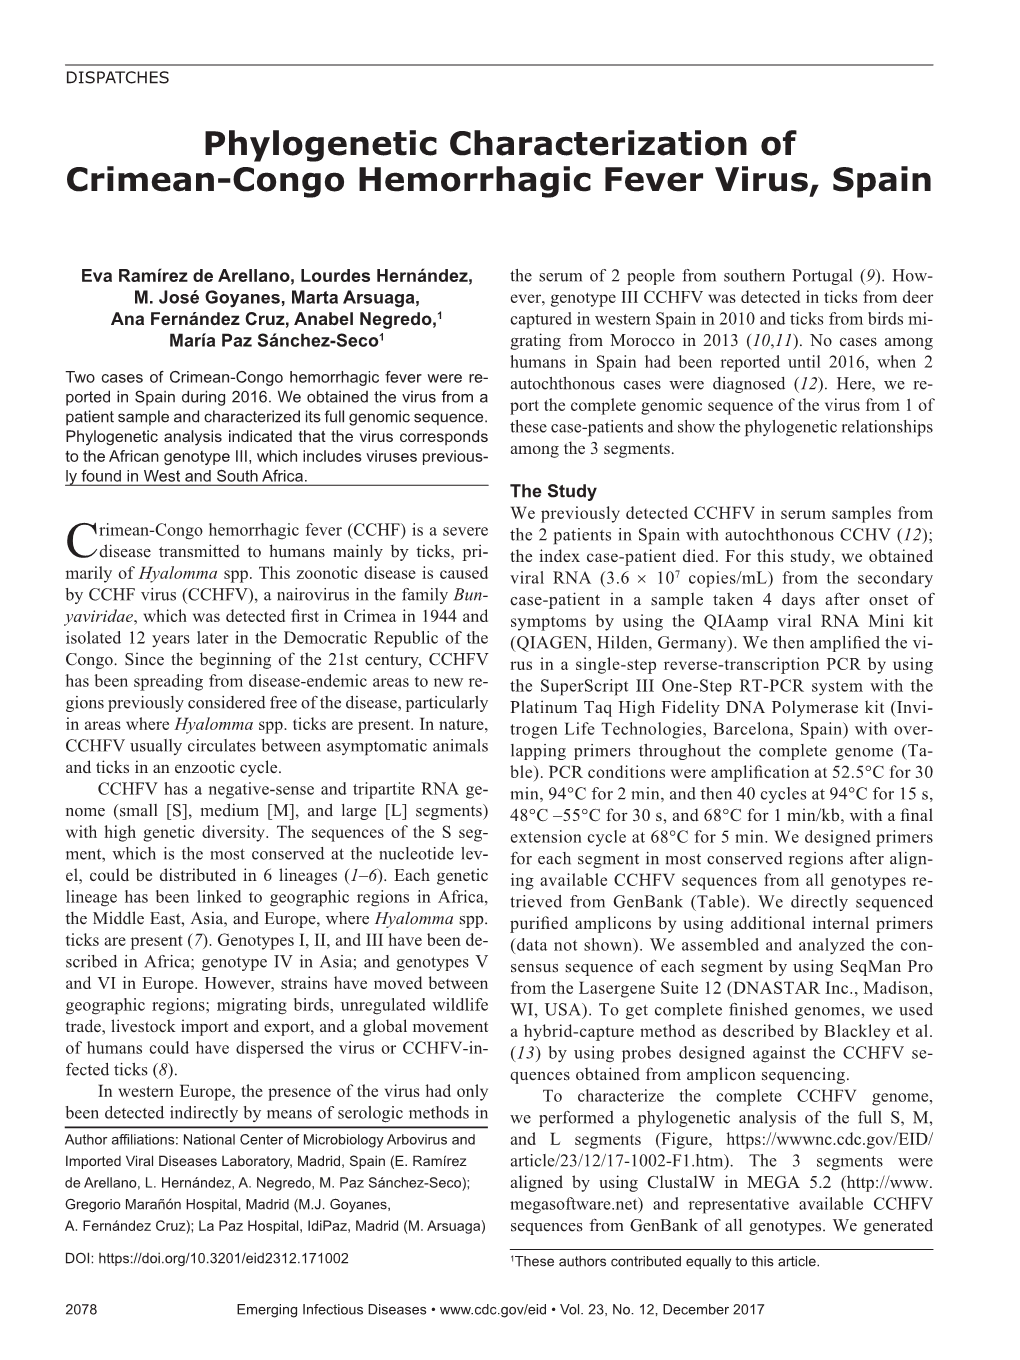 Phylogenetic Characterization of Crimean-Congo Hemorrhagic Fever Virus, Spain